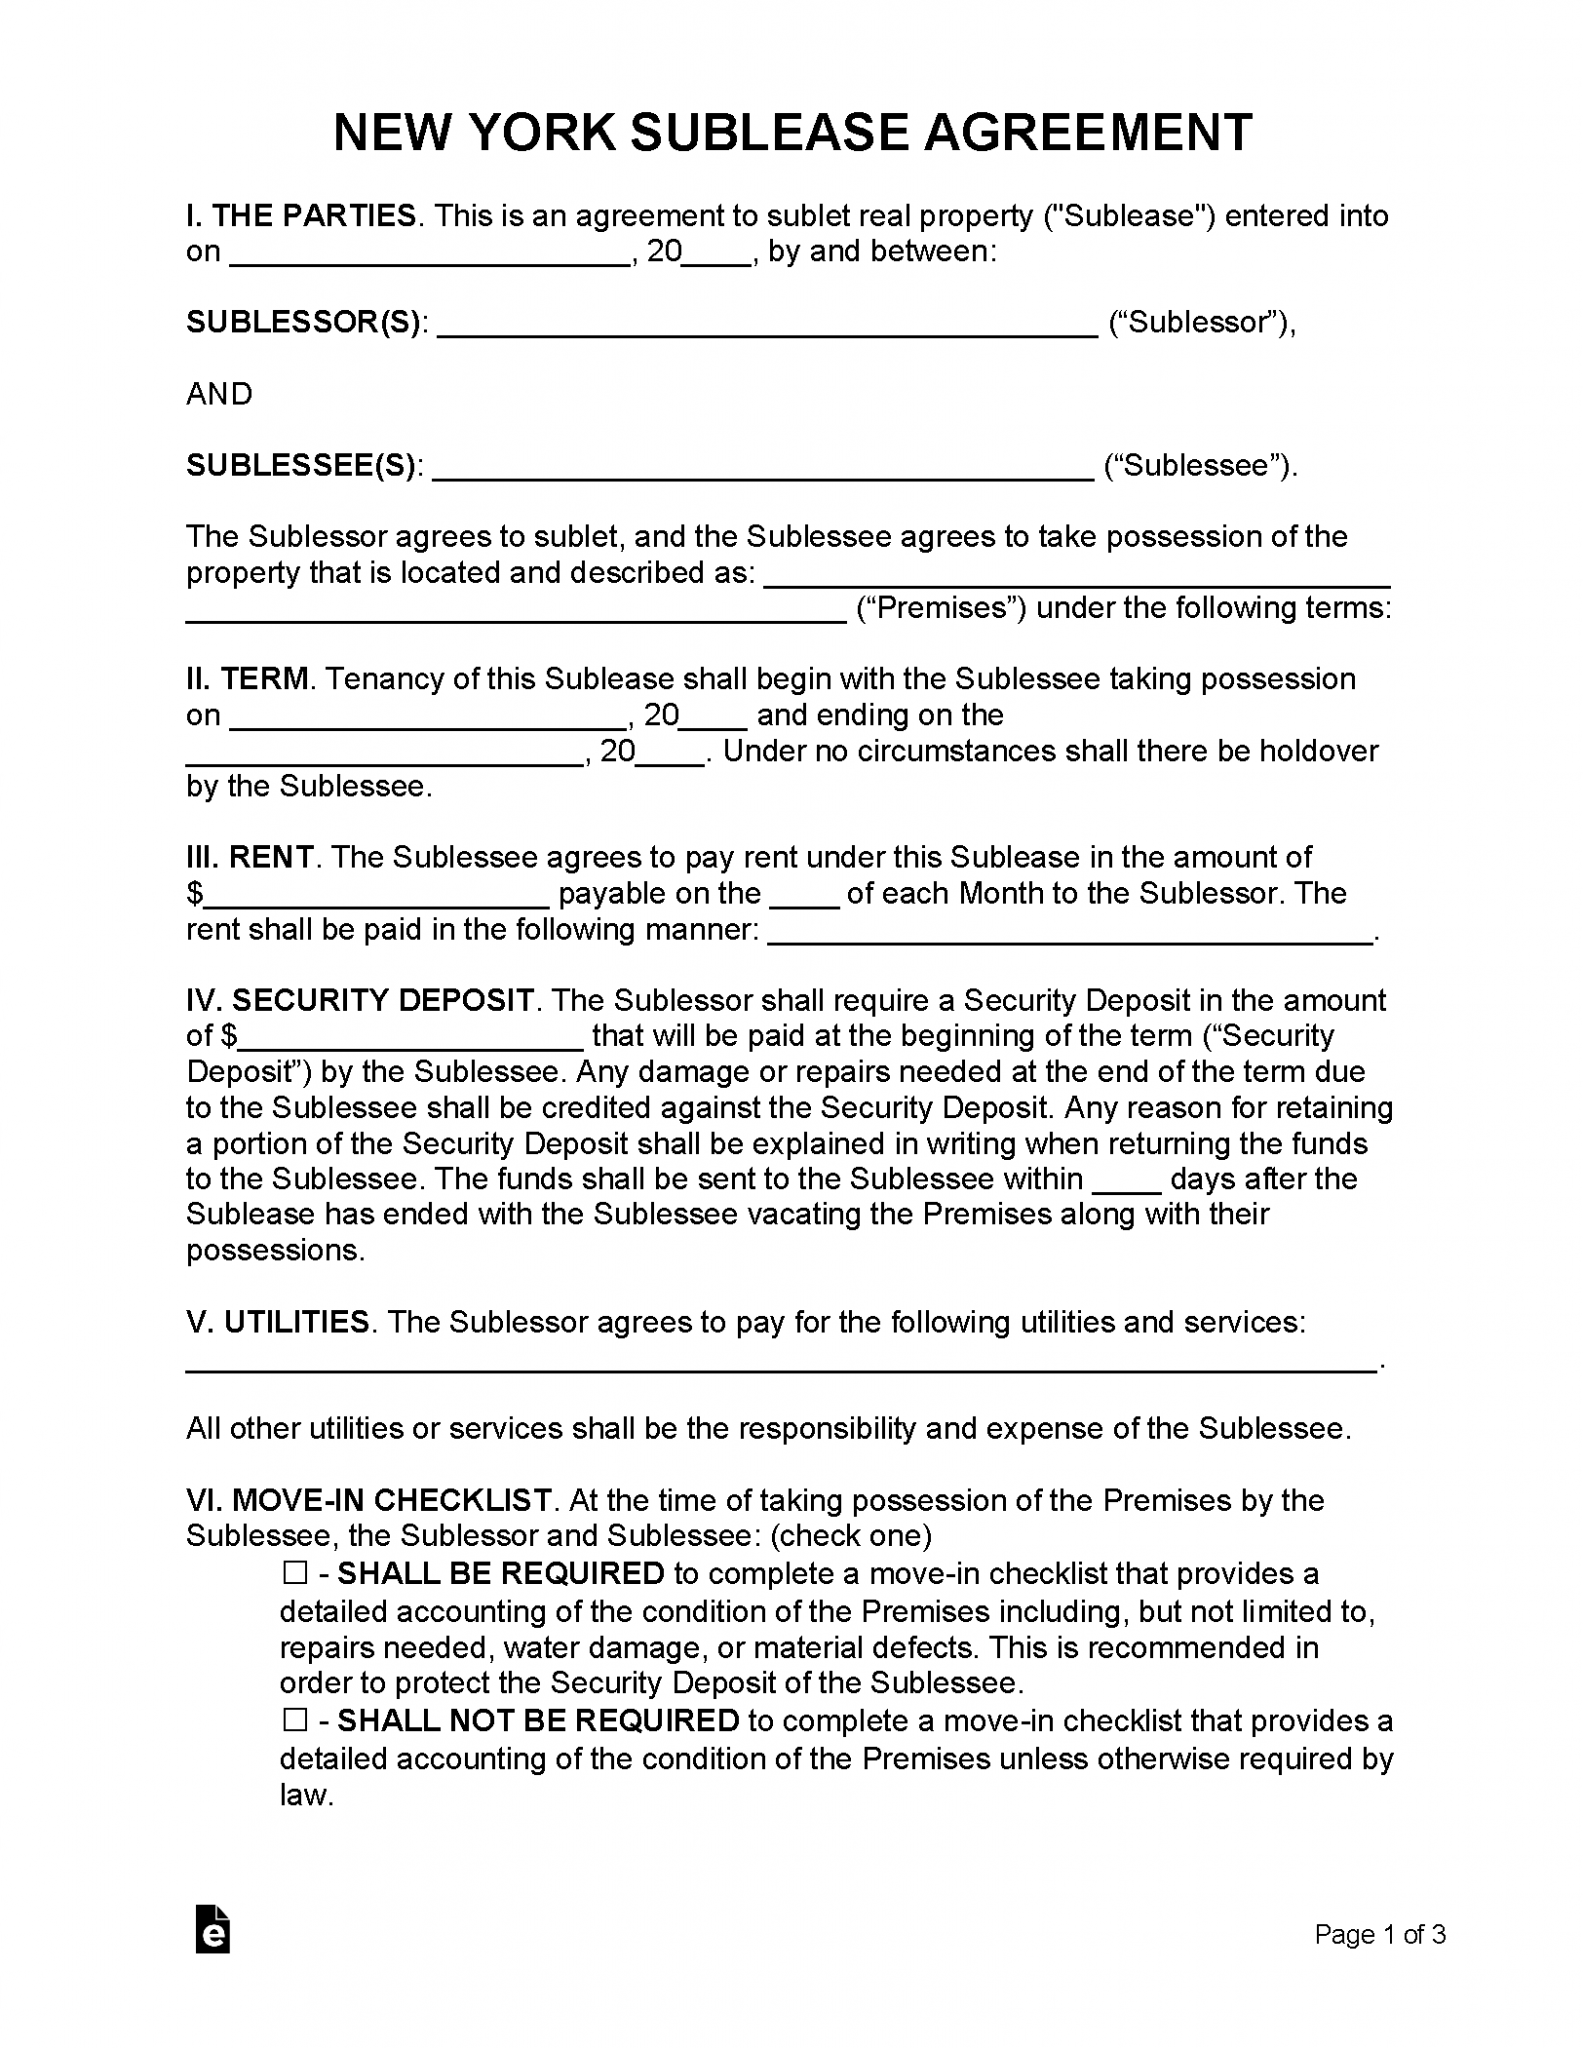 free-new-york-lease-agreement-templates-6-pdf-word-rtf